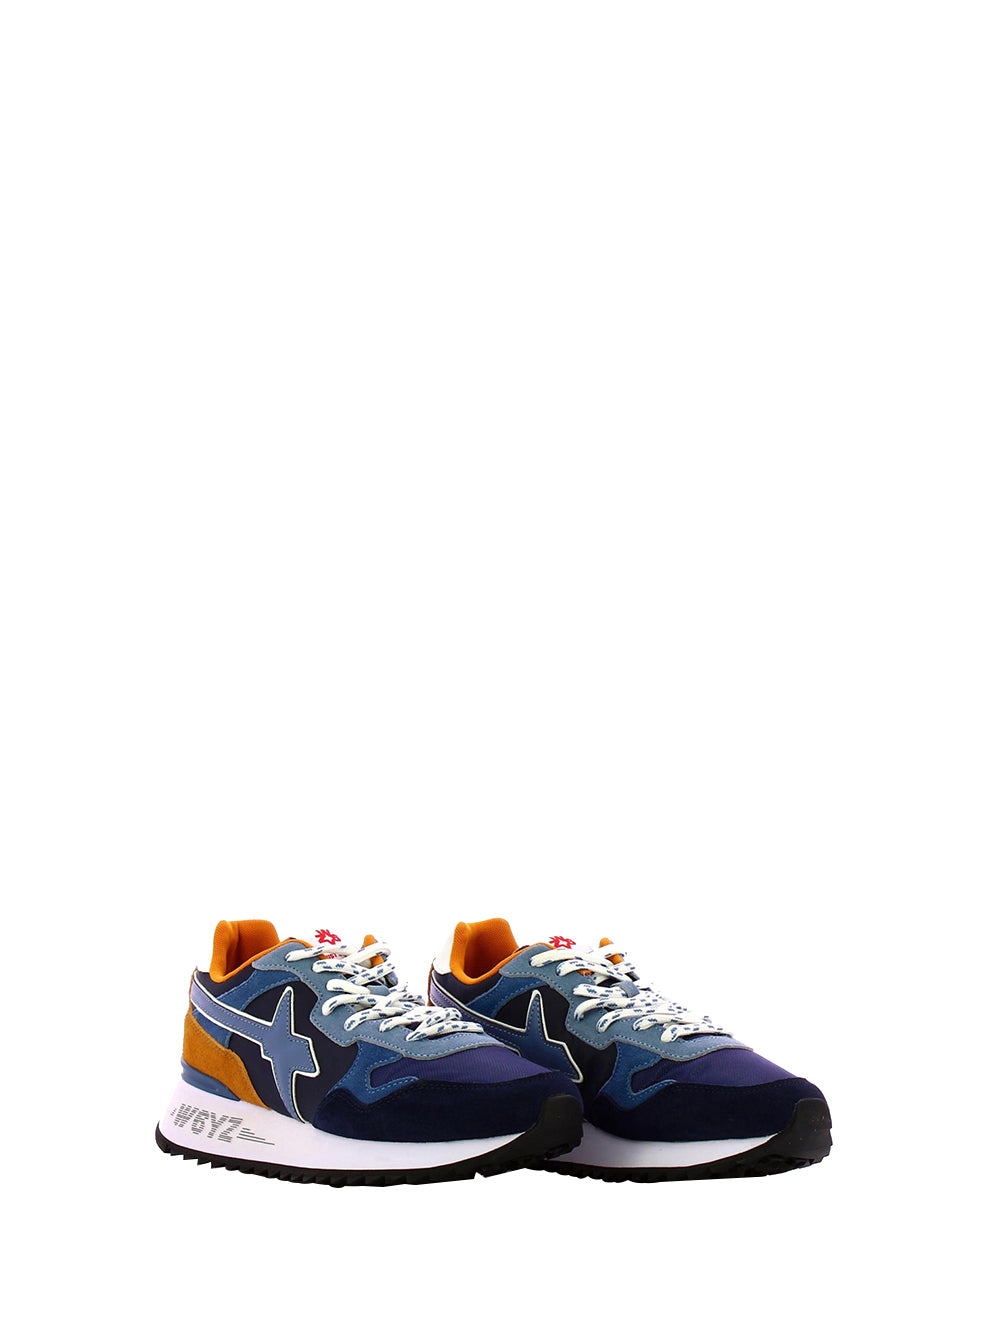 W6YZ Sneakers Uomo Blu/celeste con tomaia in pelle scomosciata e nylon Blu/celeste